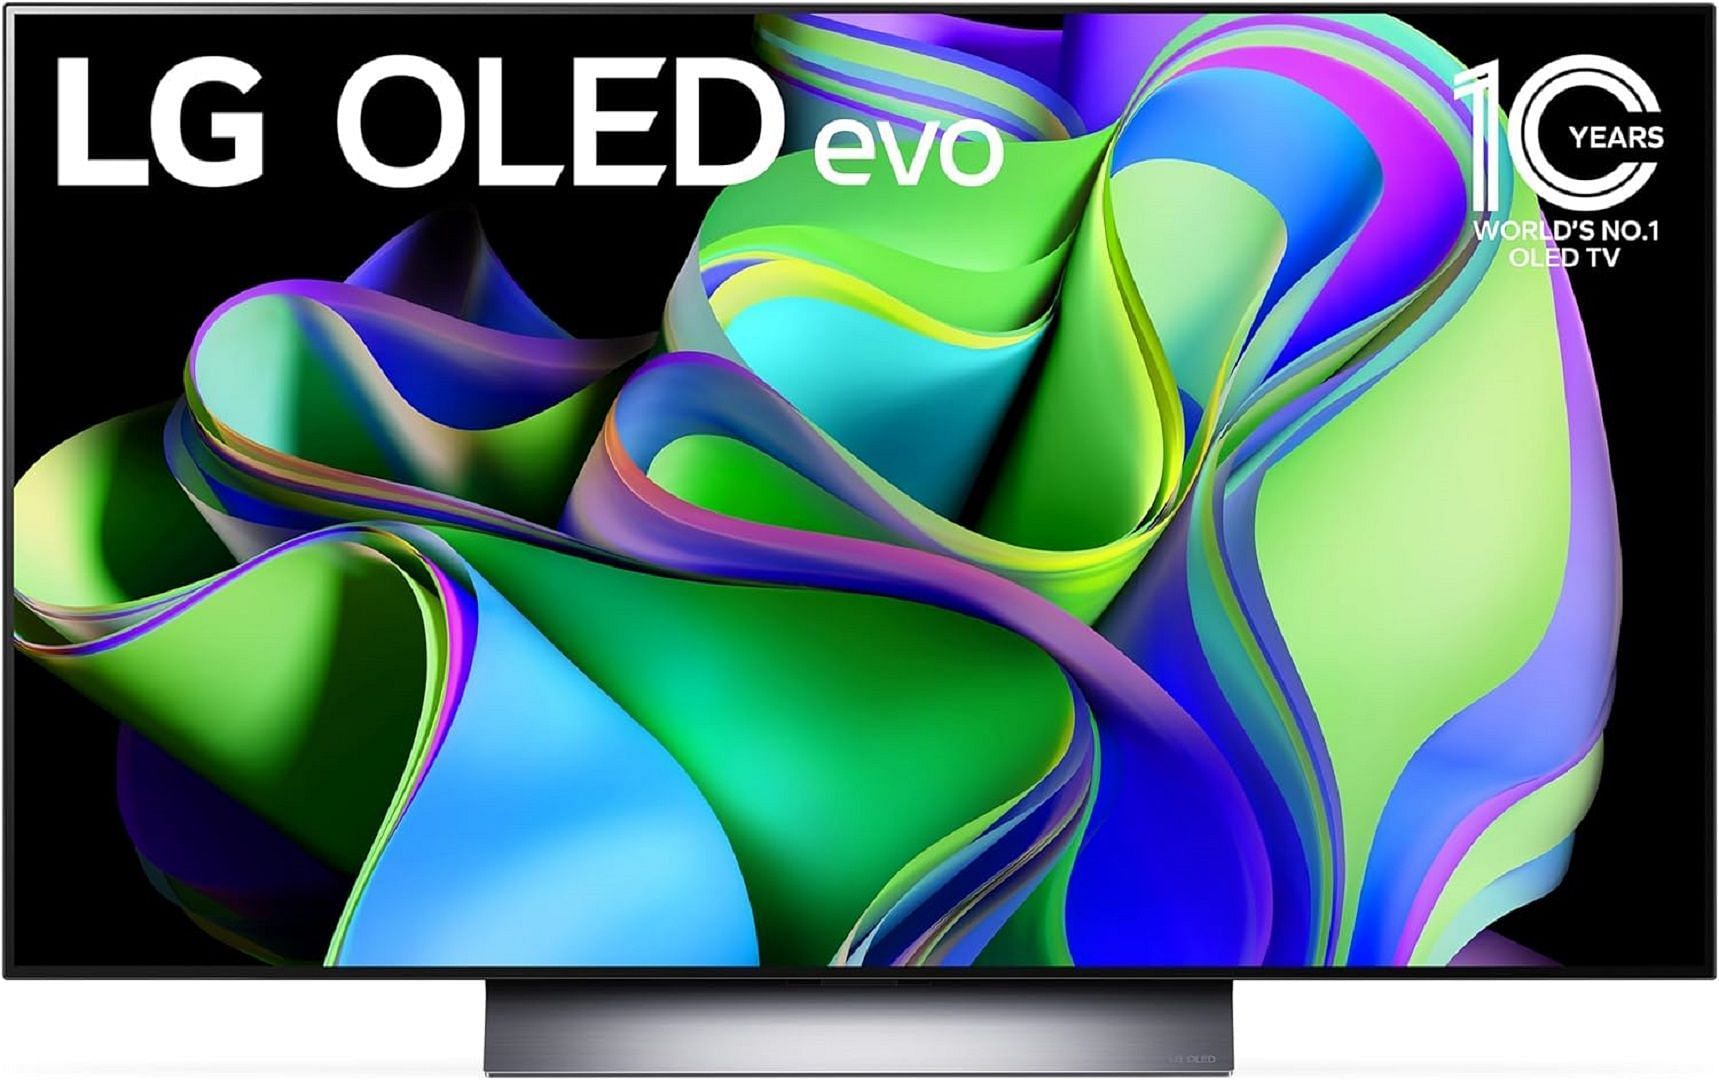 LG C3 48-inch OLED TV (Image via LG)